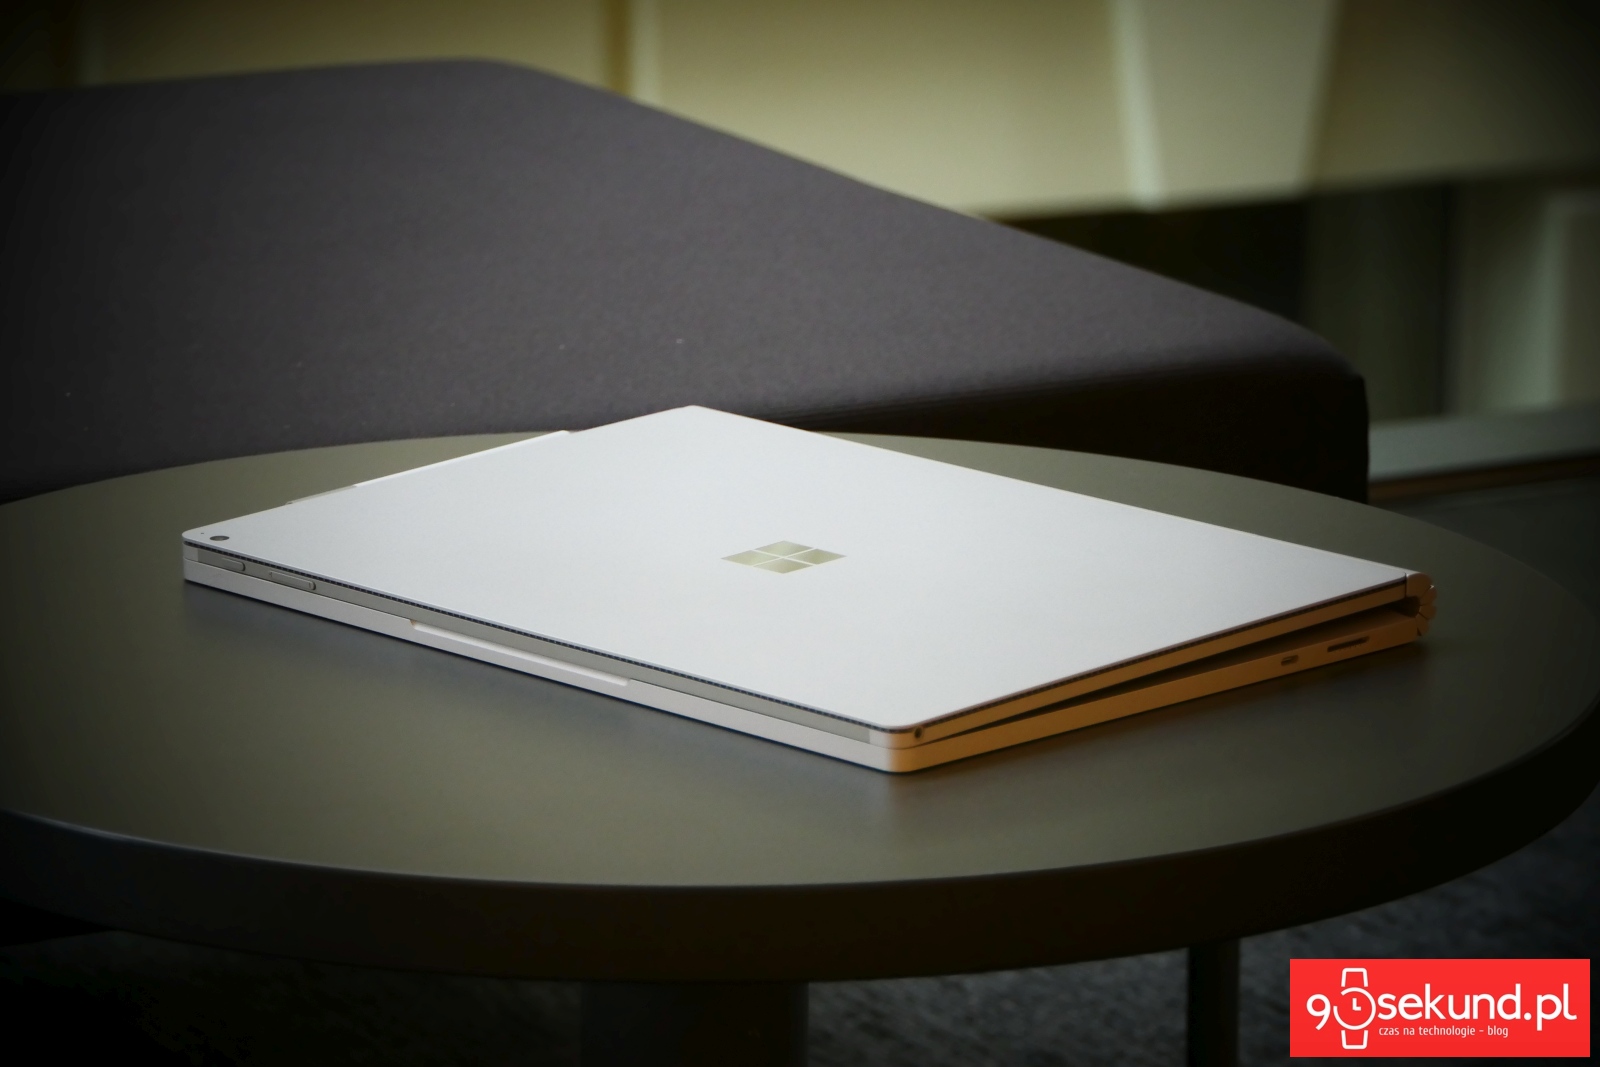 Recenzja Microsoft Surface Book 2 (15 cali) - Michał Brożyński - 90sekund.pl